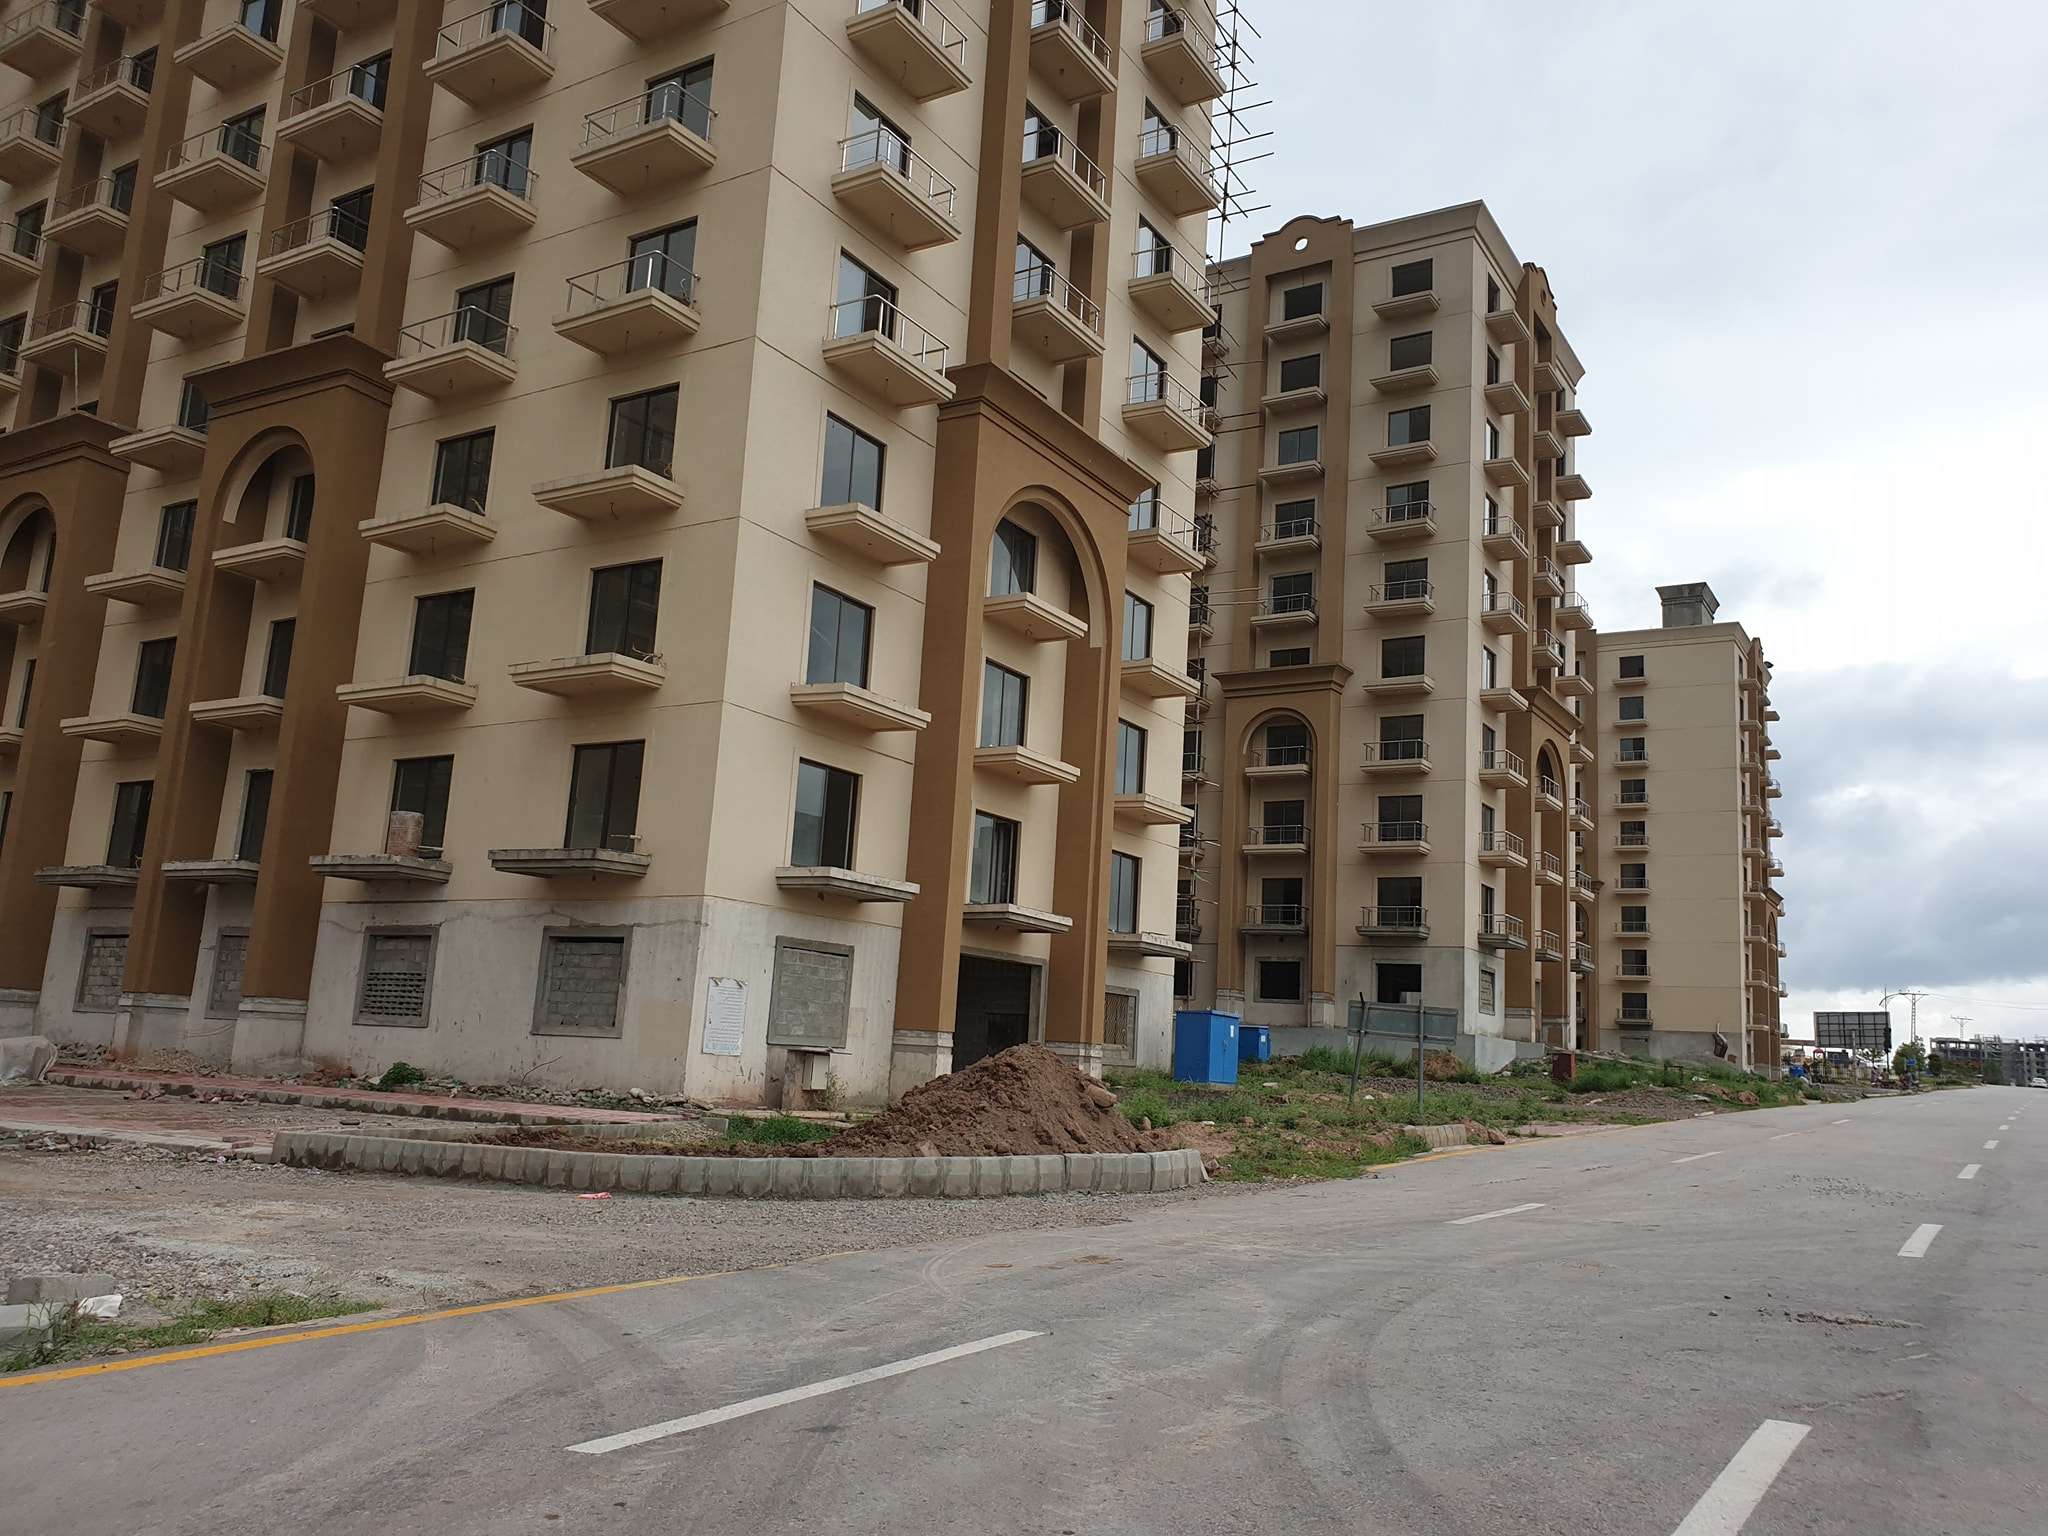 Apartments Pakistan